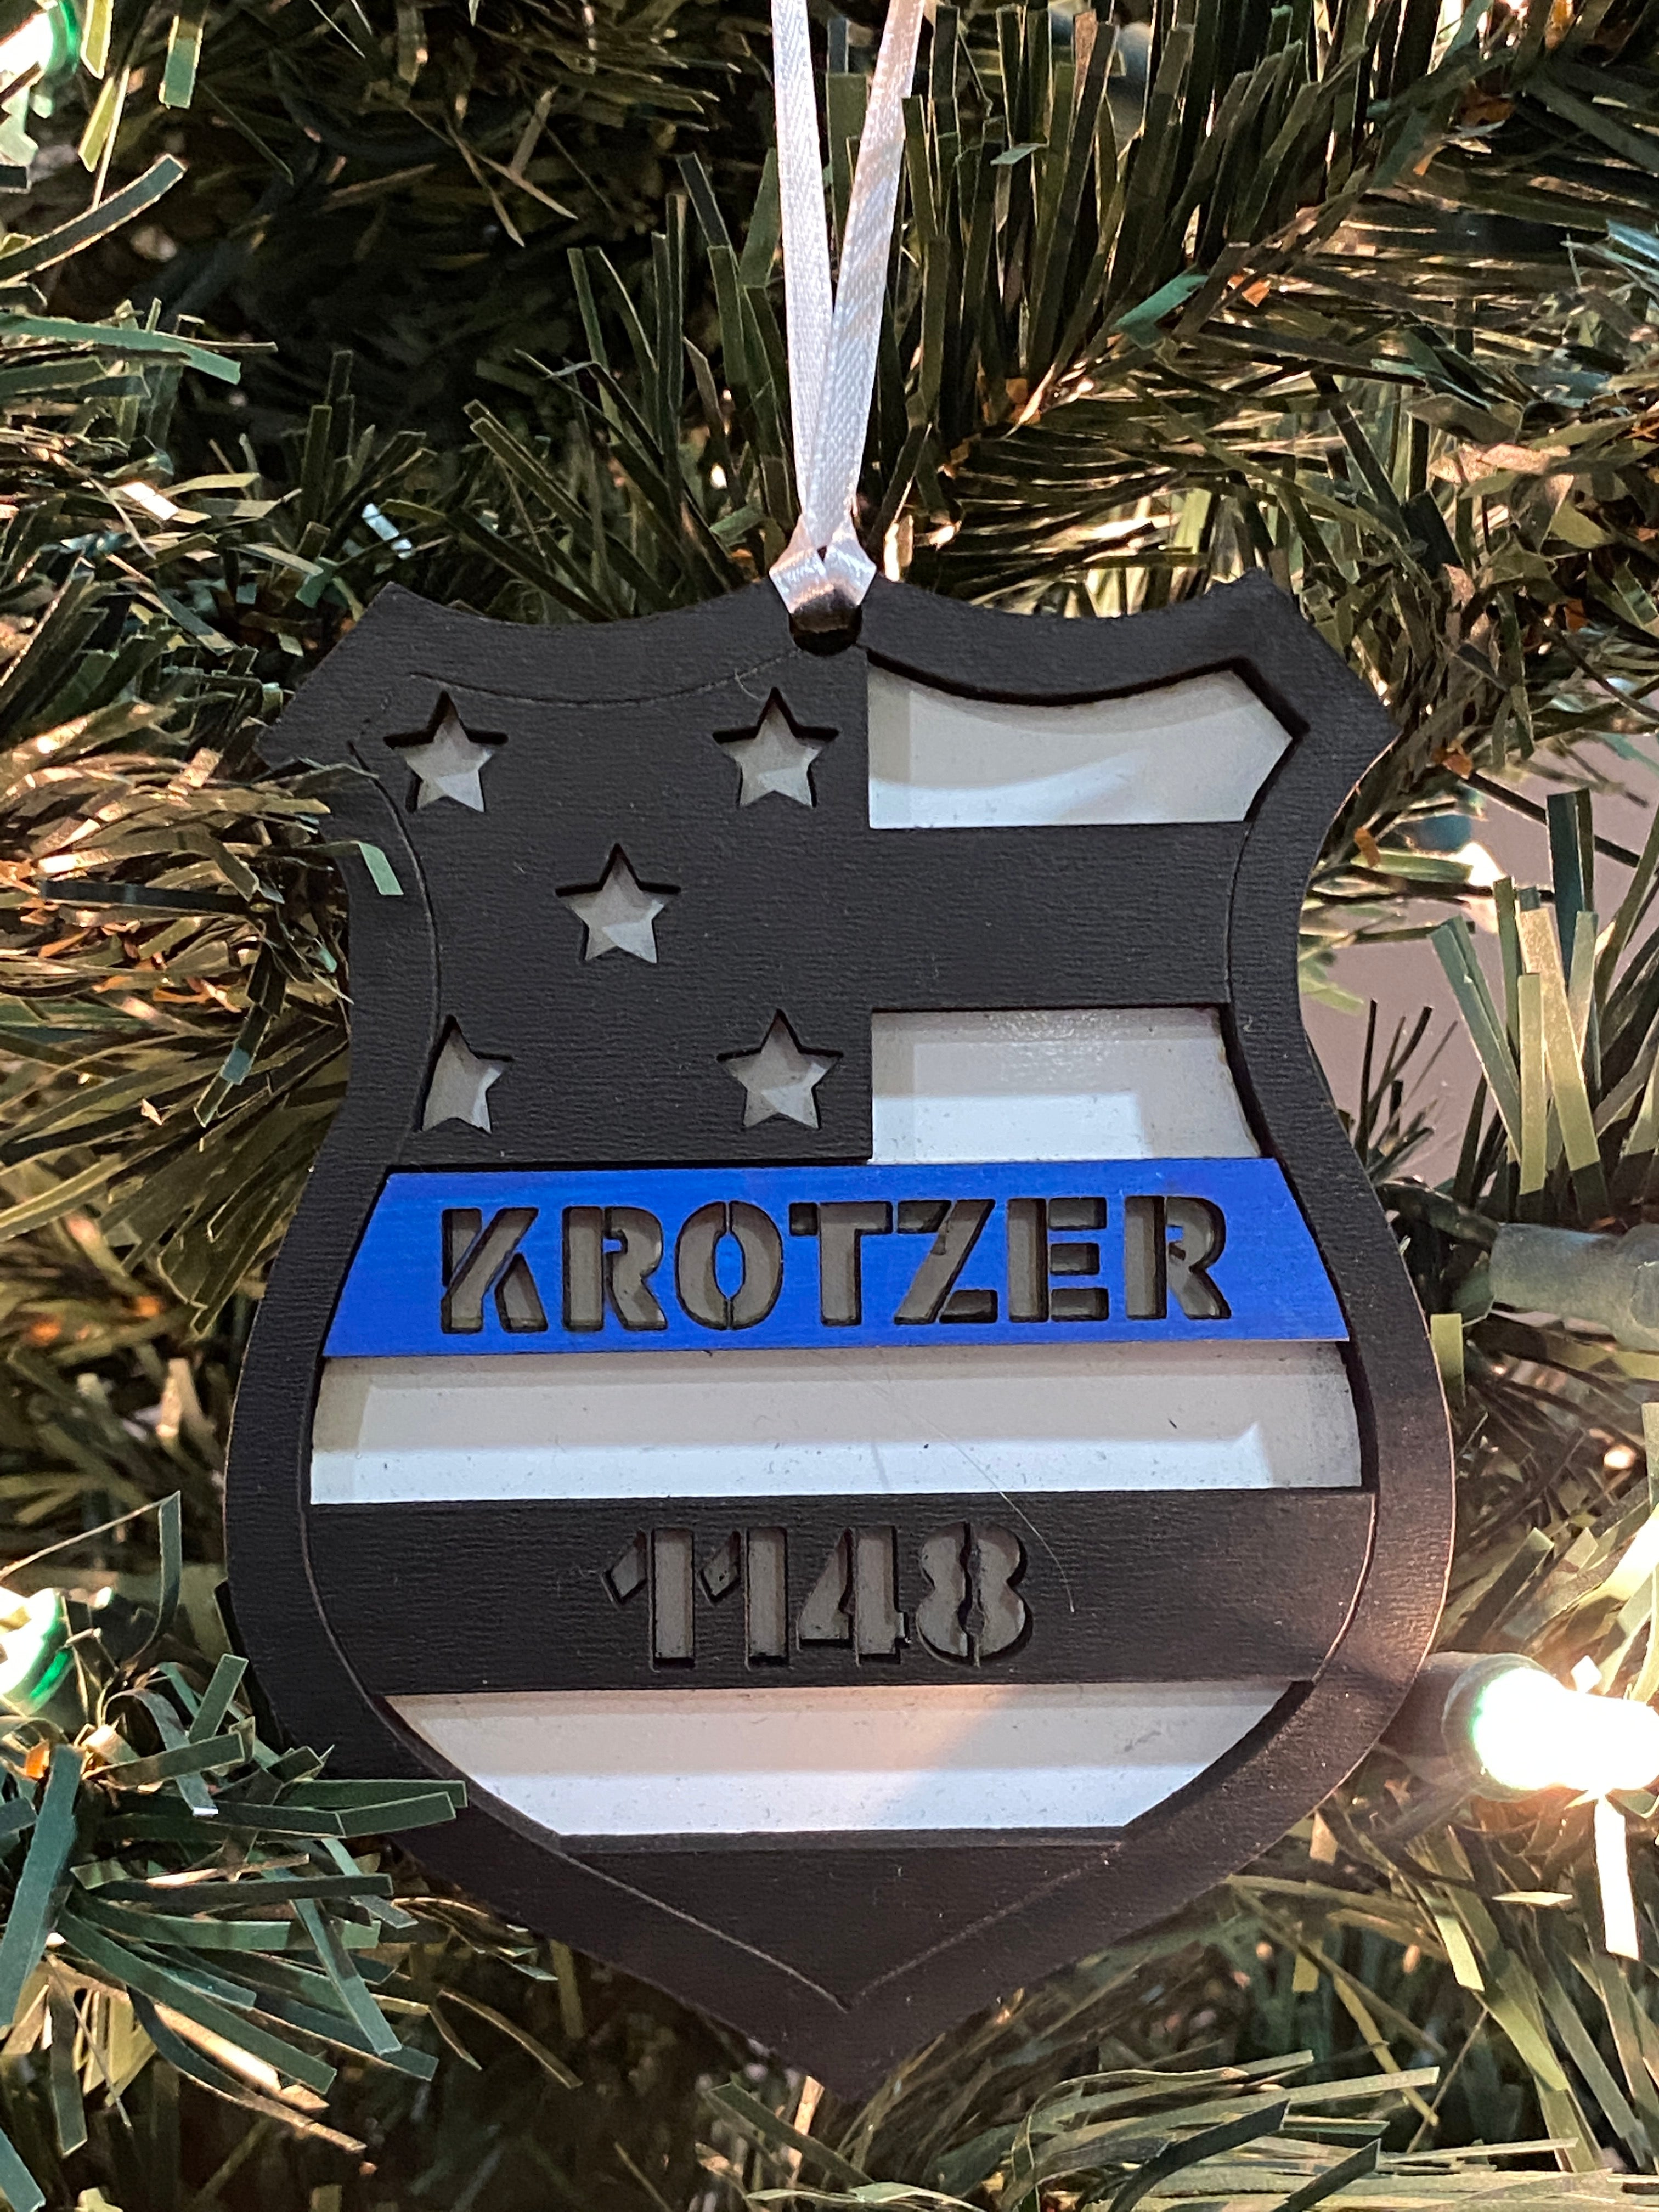 Police Badge Blue Line Ornament